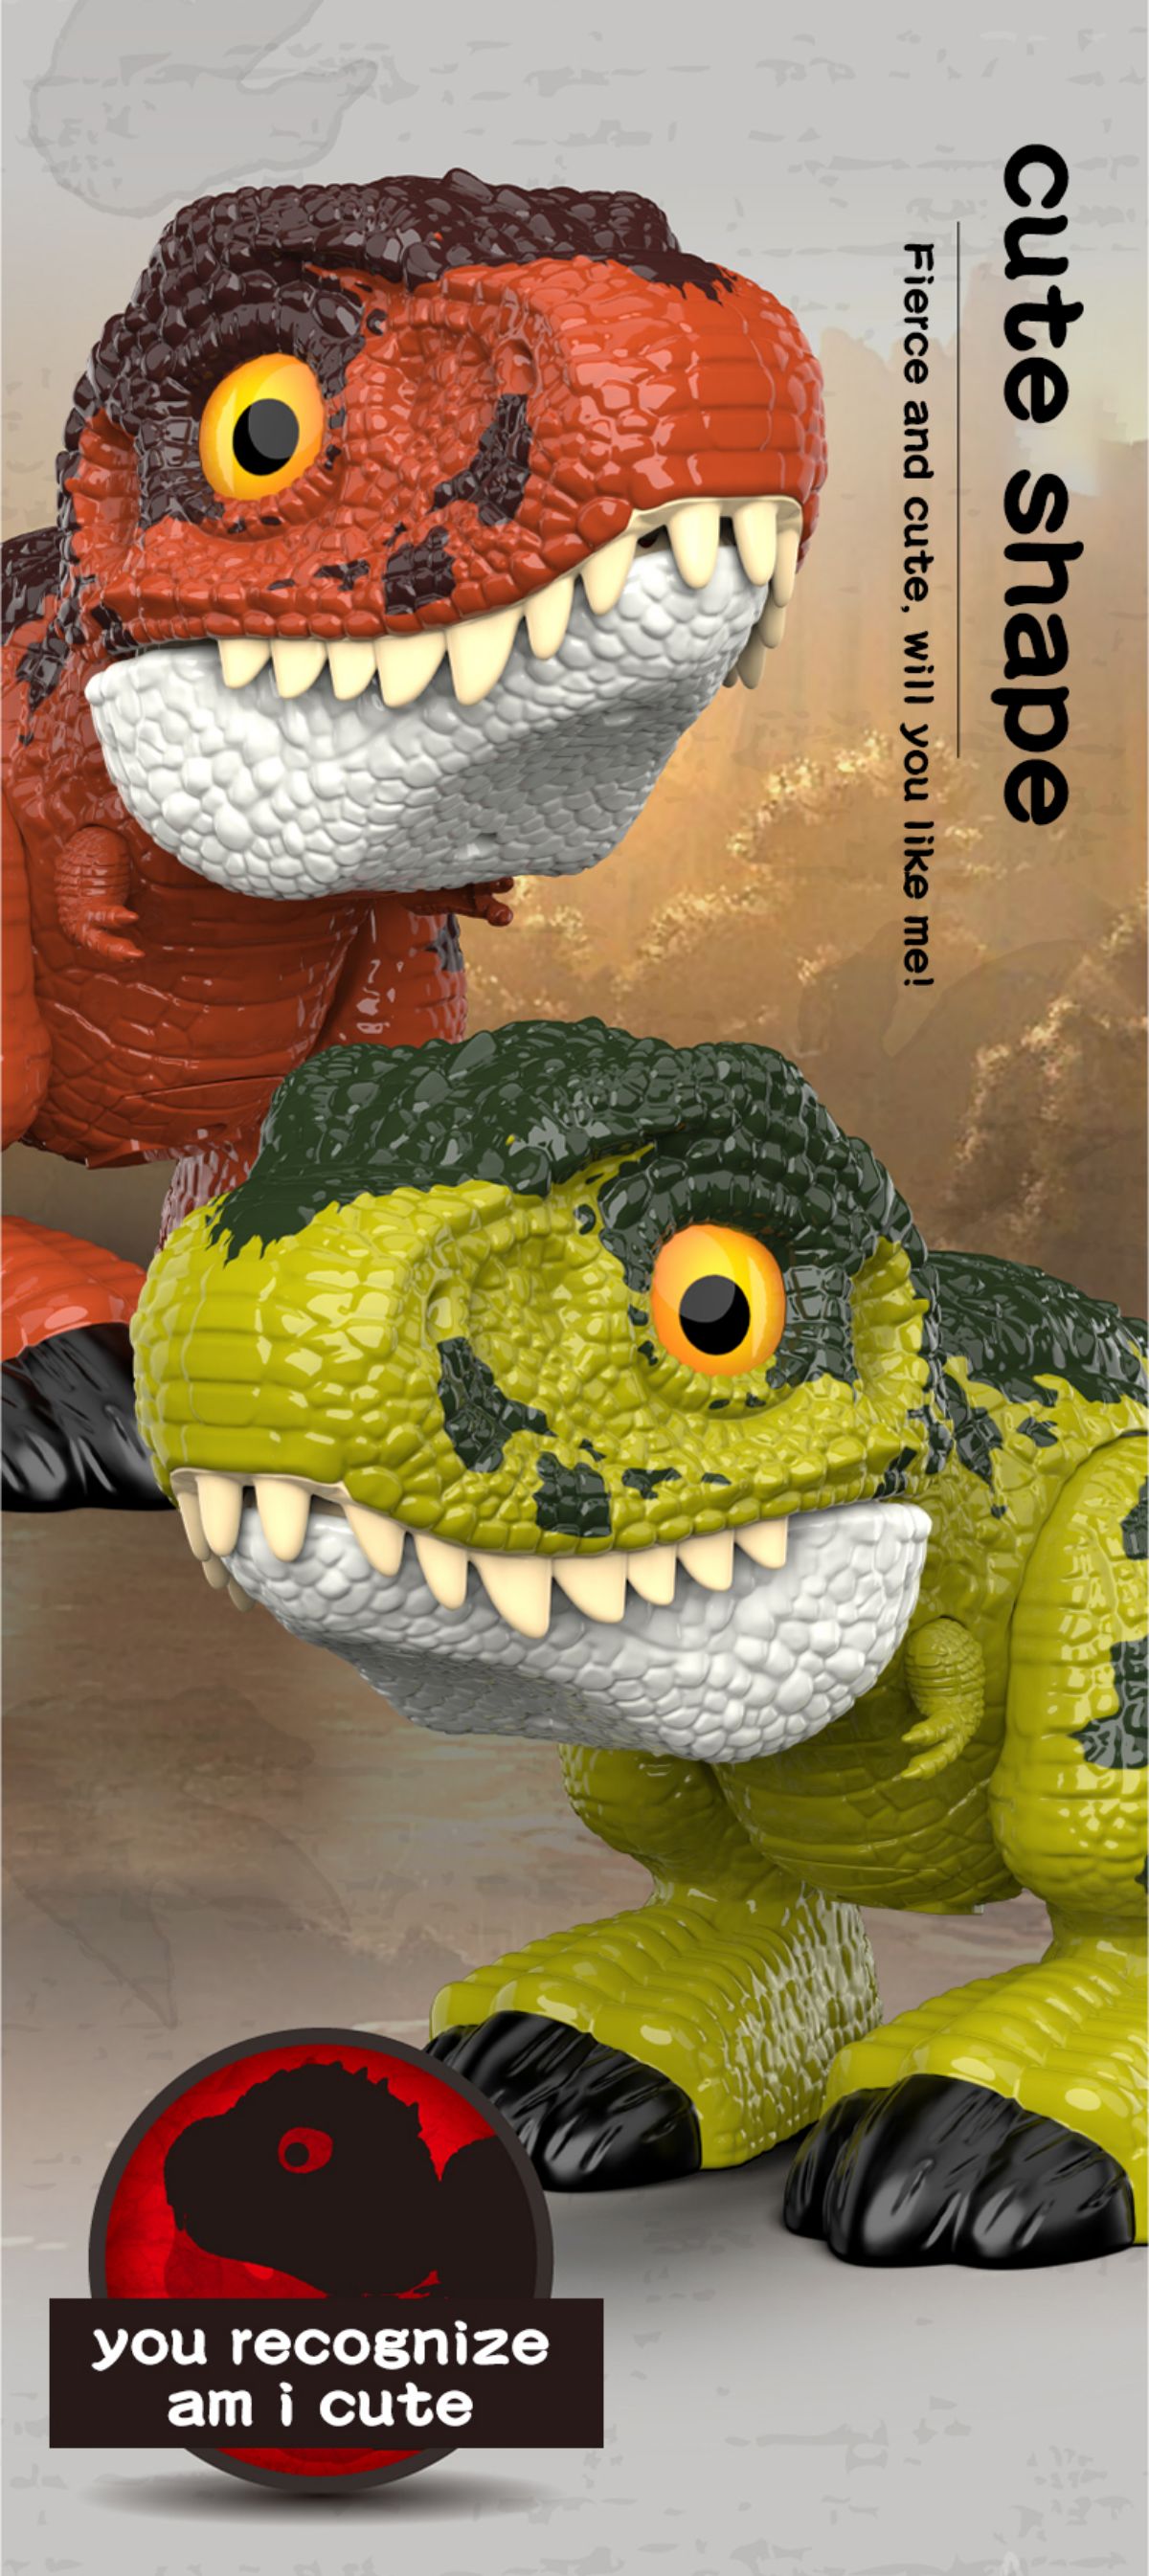 Dinosaur 3